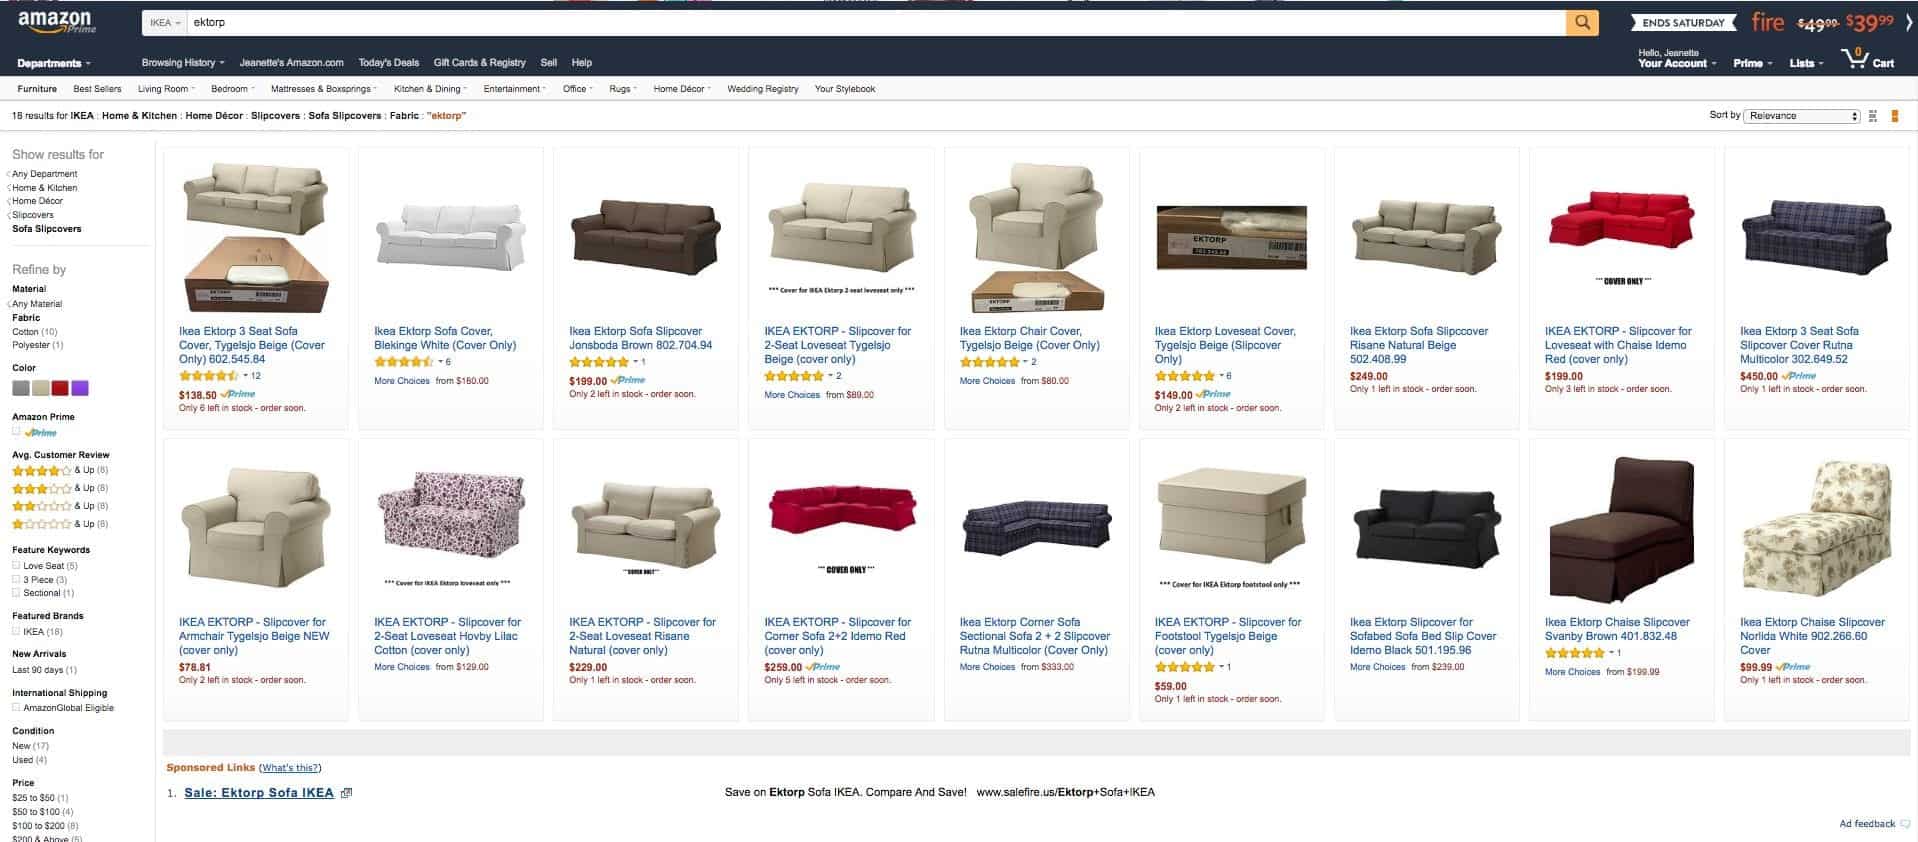 5 Reasons to Love Ikea Ektorp Couches Slipcovers on Amazon